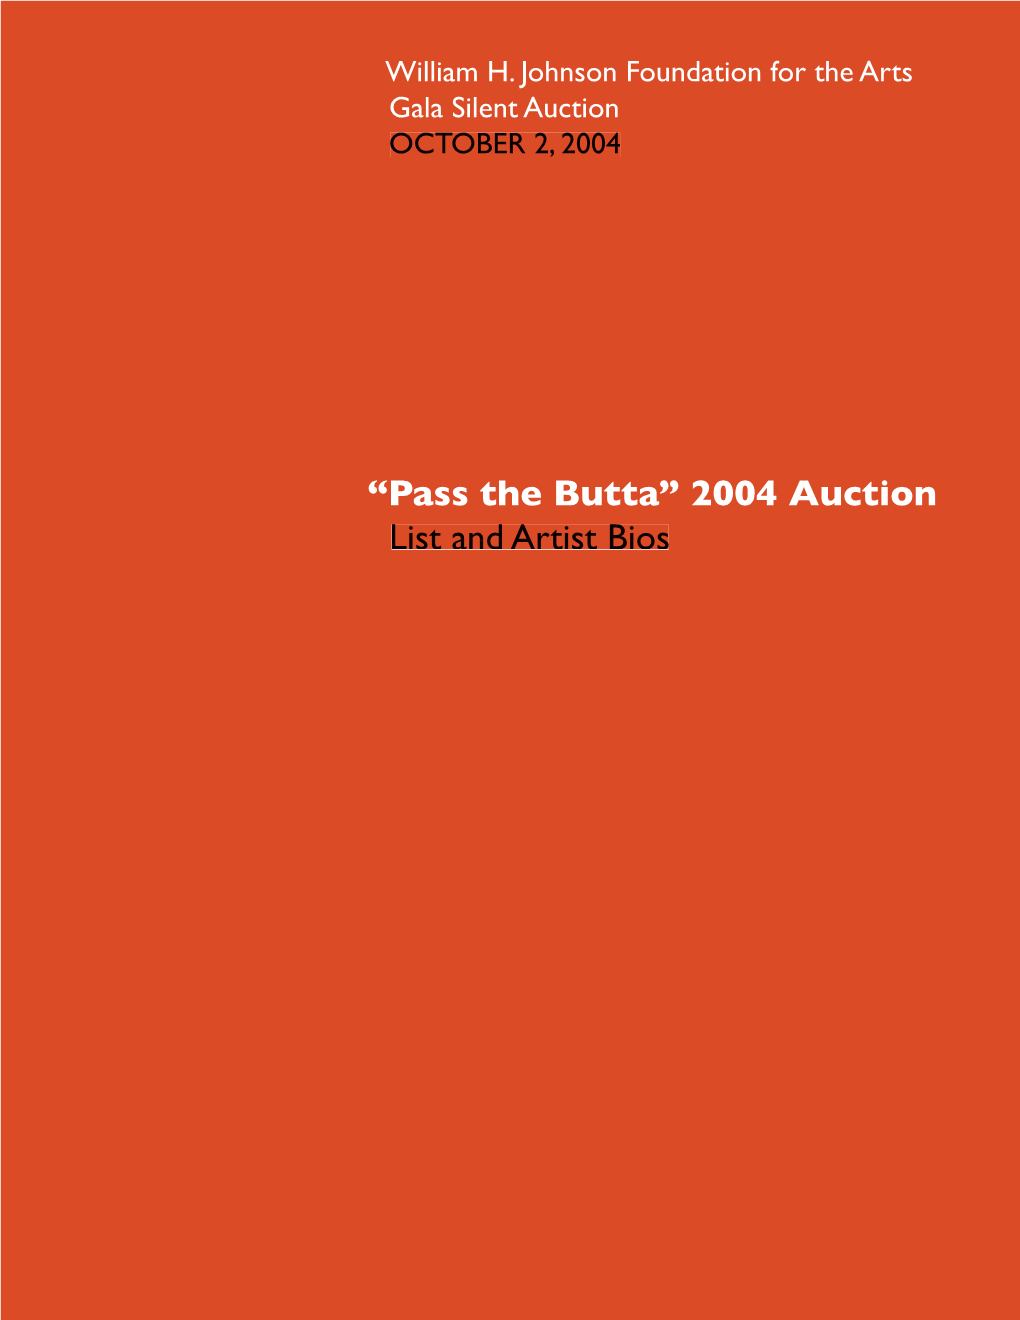 “Pass the Butta” 2004 Auction List and Artist Bios 1